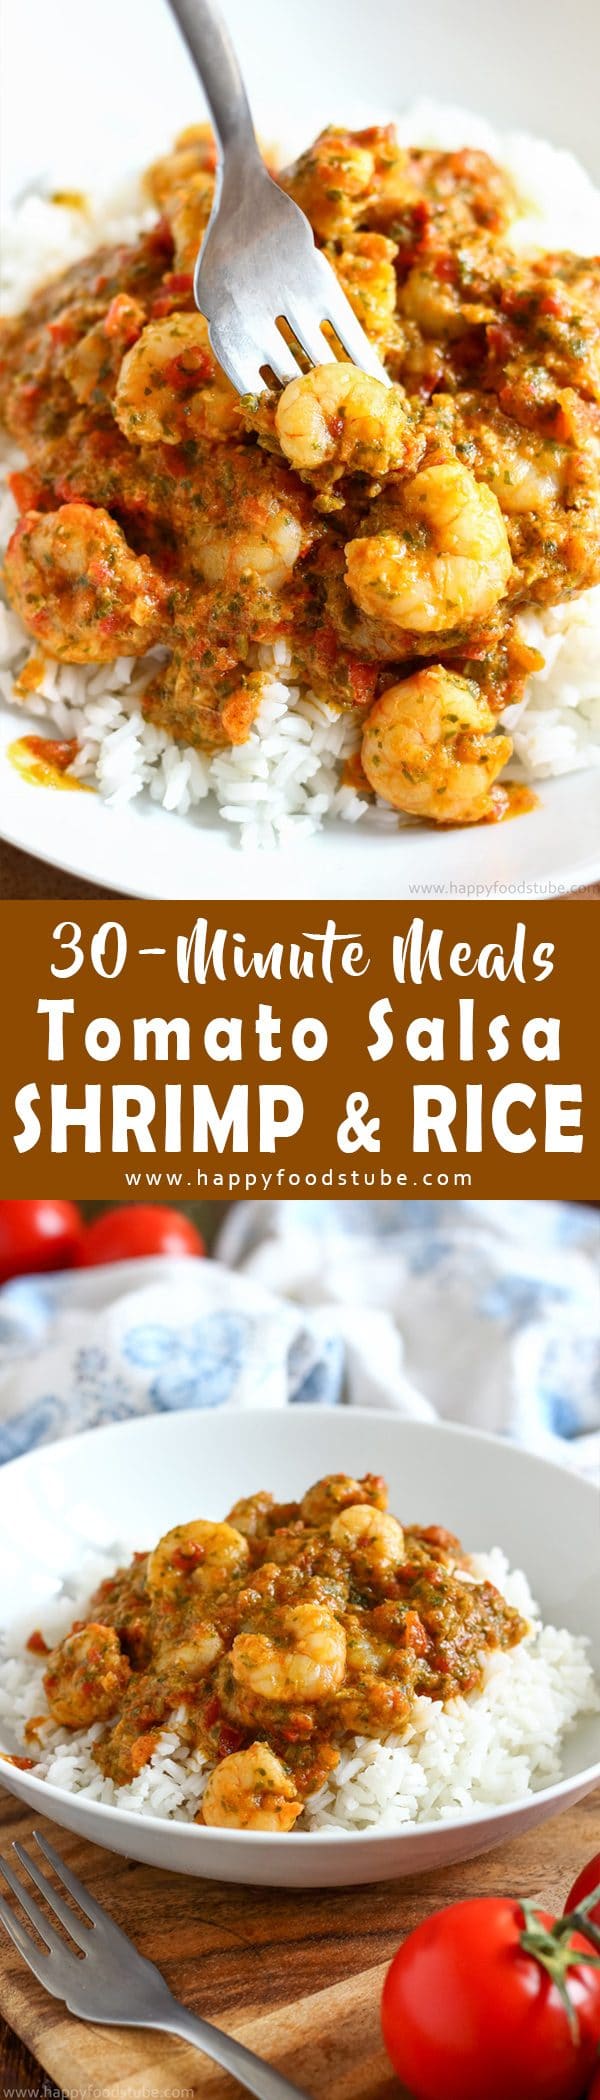 Tomato Salsa Shrimp and Rice Recipe 30 minute meals